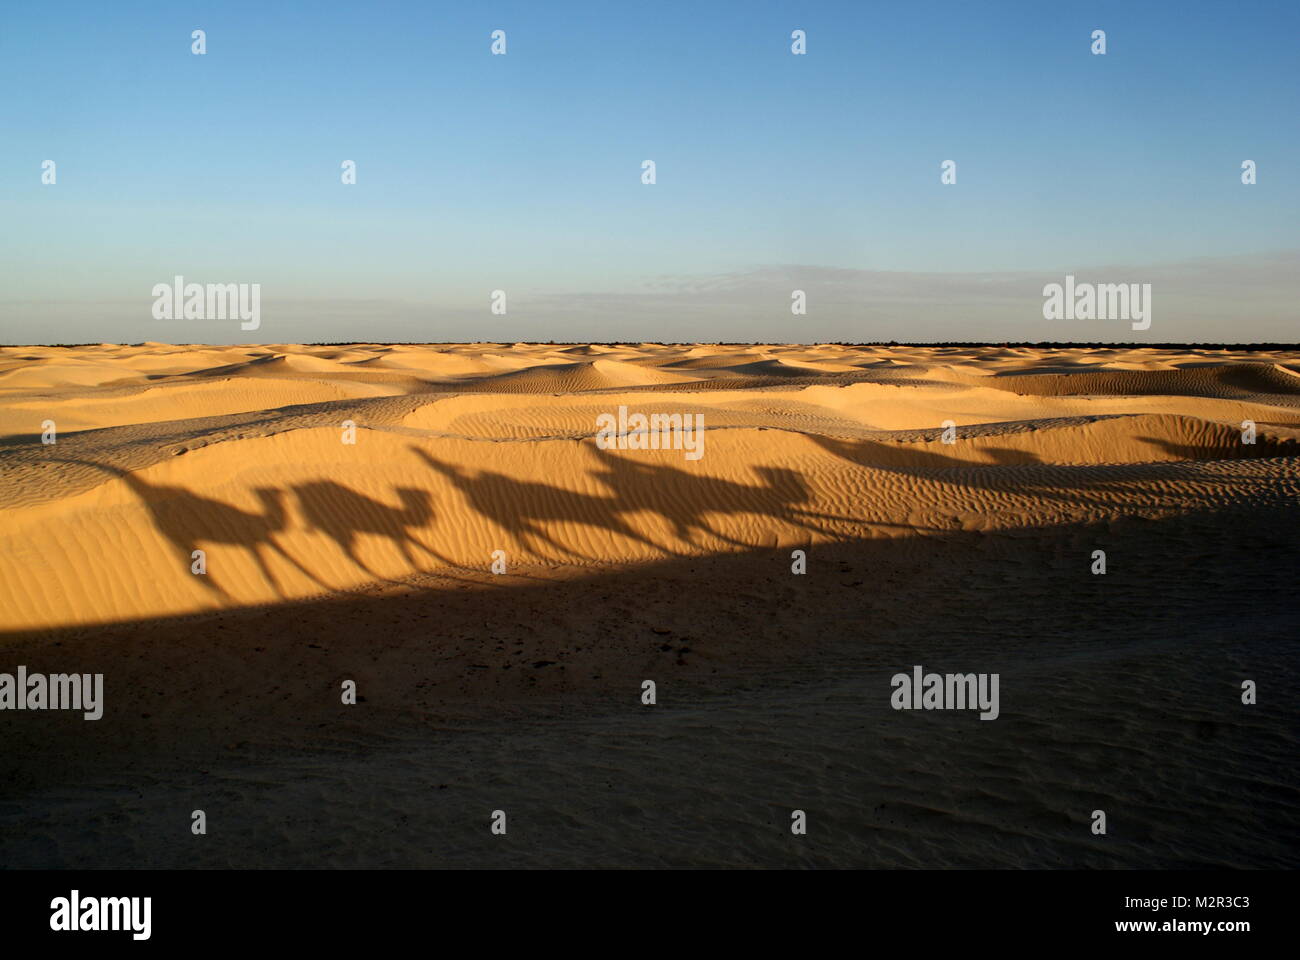 Shadows on the sand dunes of camels trekking in the Sahara desert near Douz, Tunisia Stock Photo